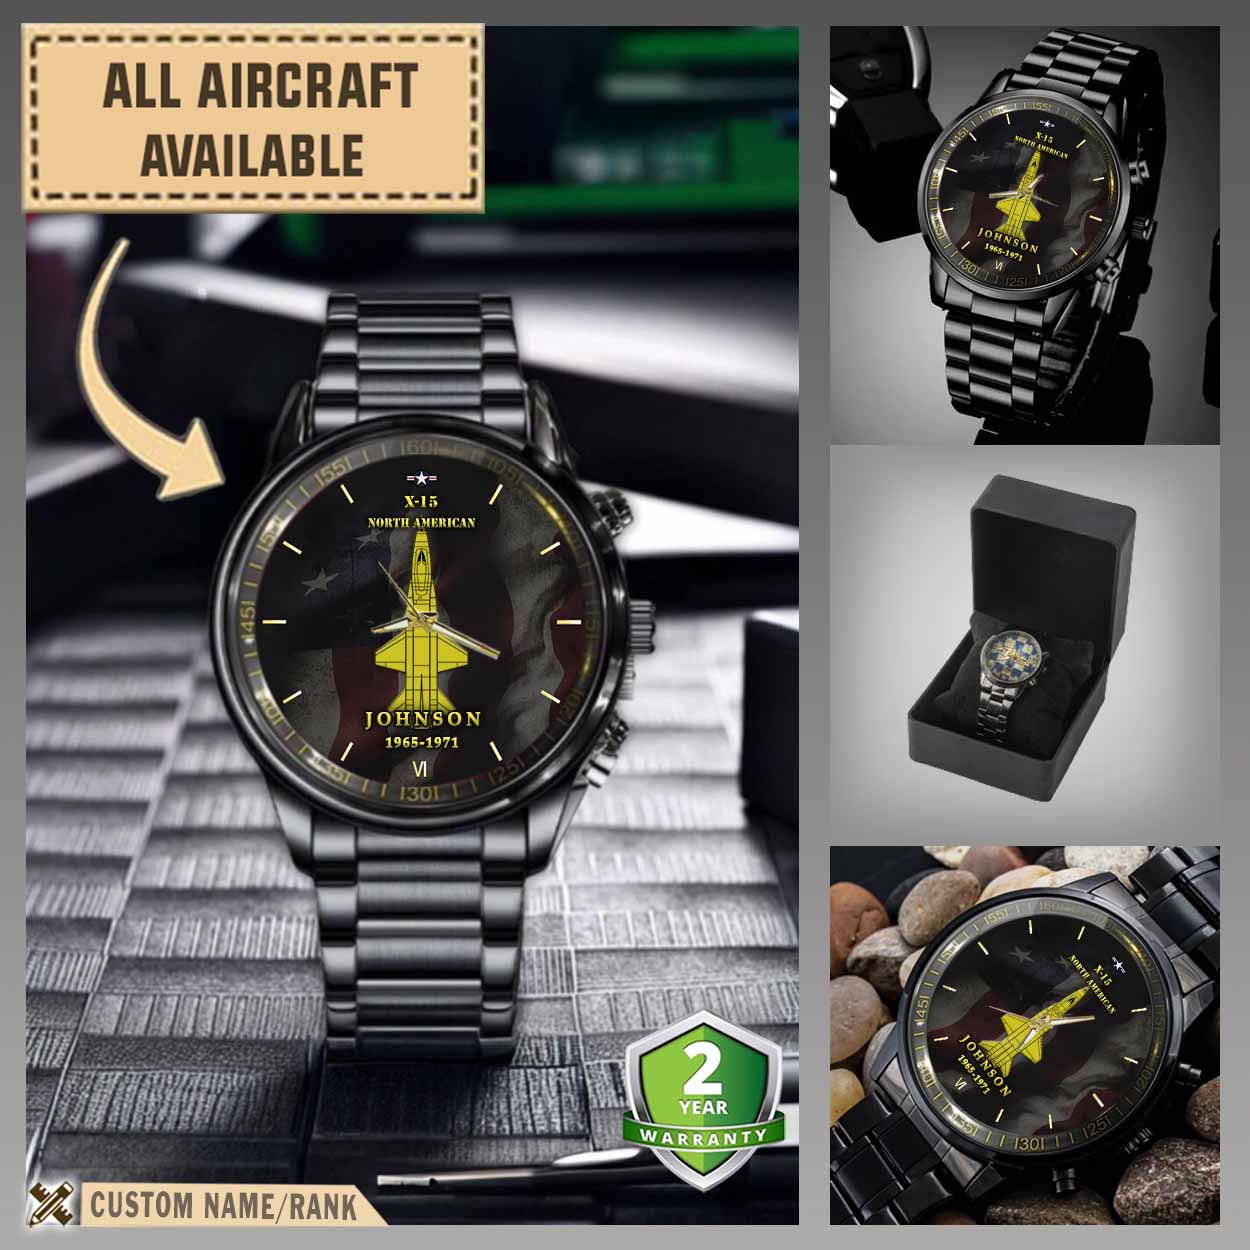 north american x 15 x15aircraft black wrist watch il5tg